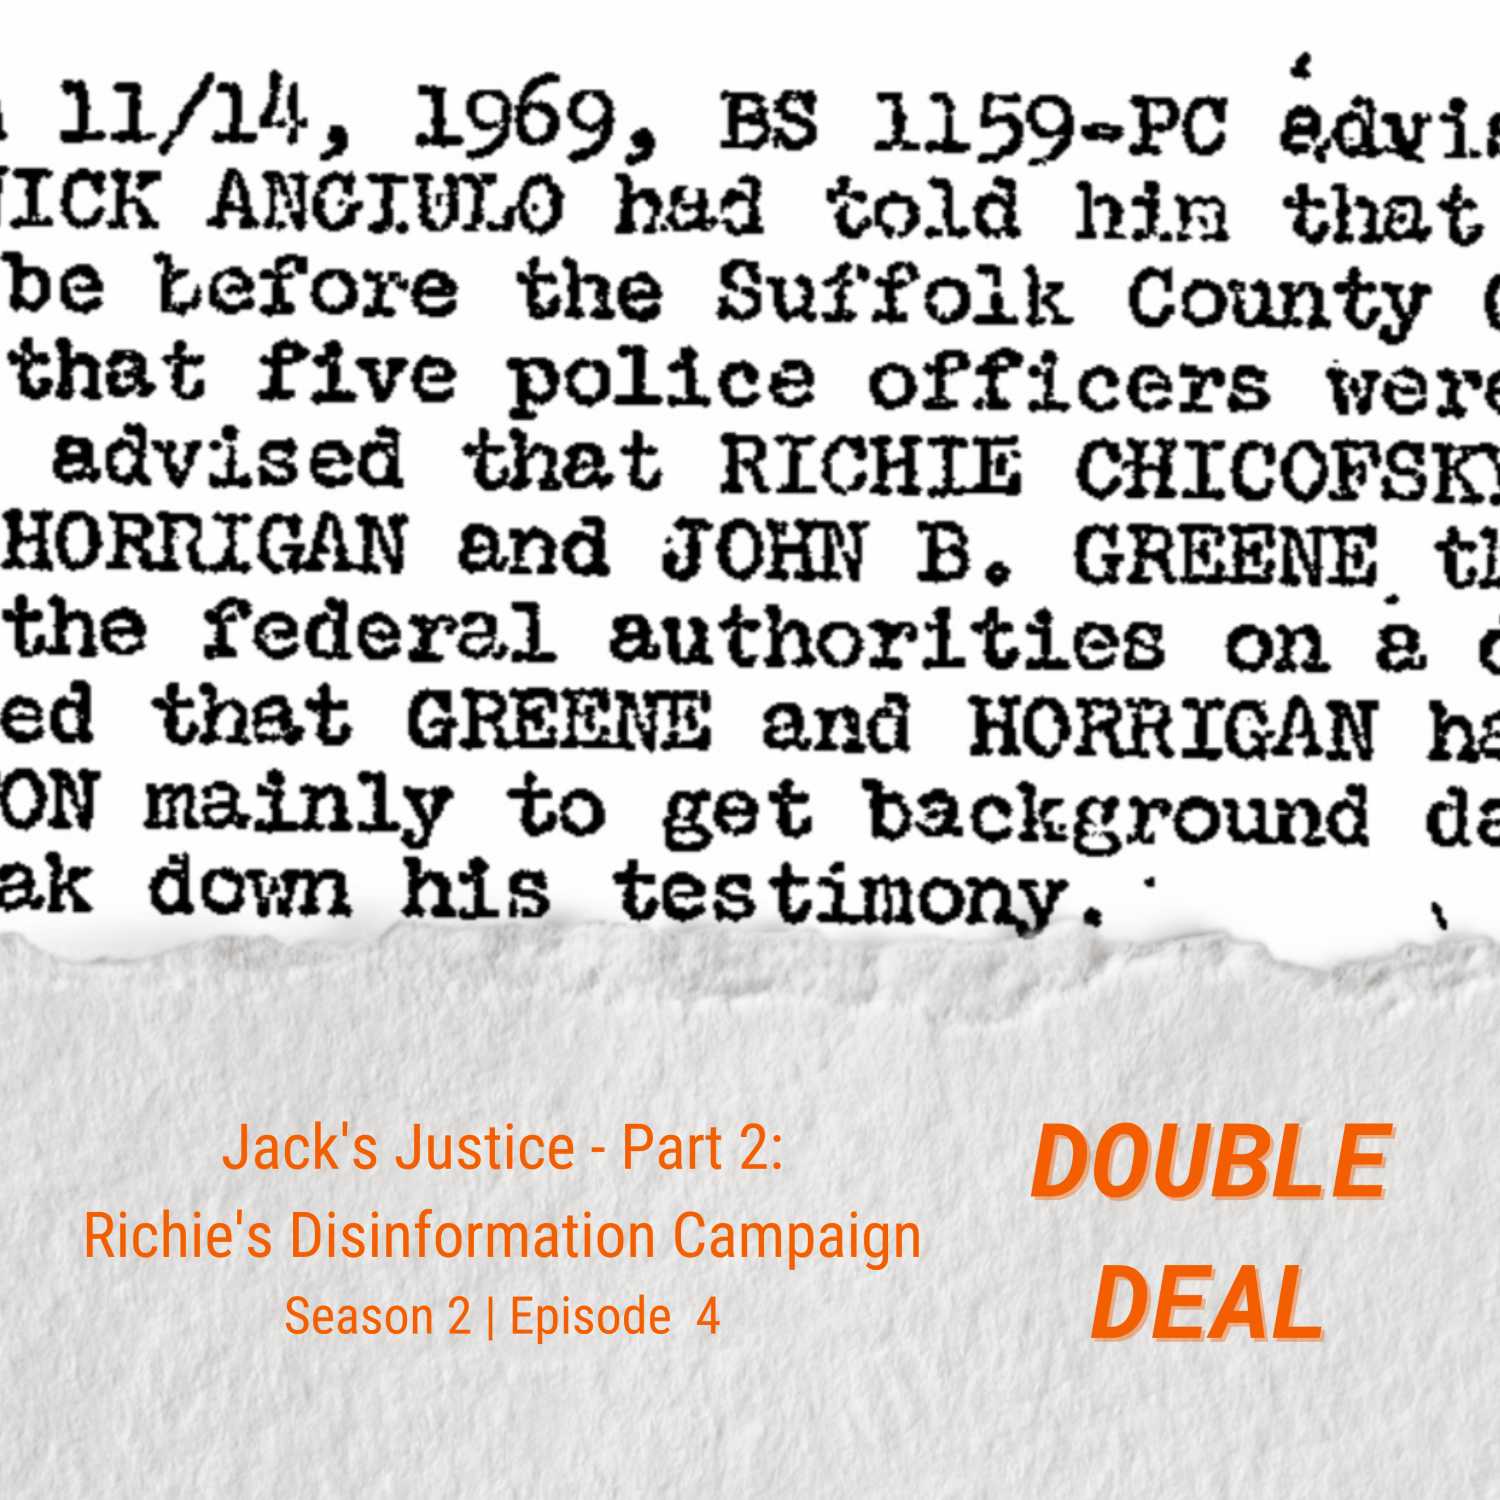 Jack's Justice - Part 2: Richie's Disinformation Campaign